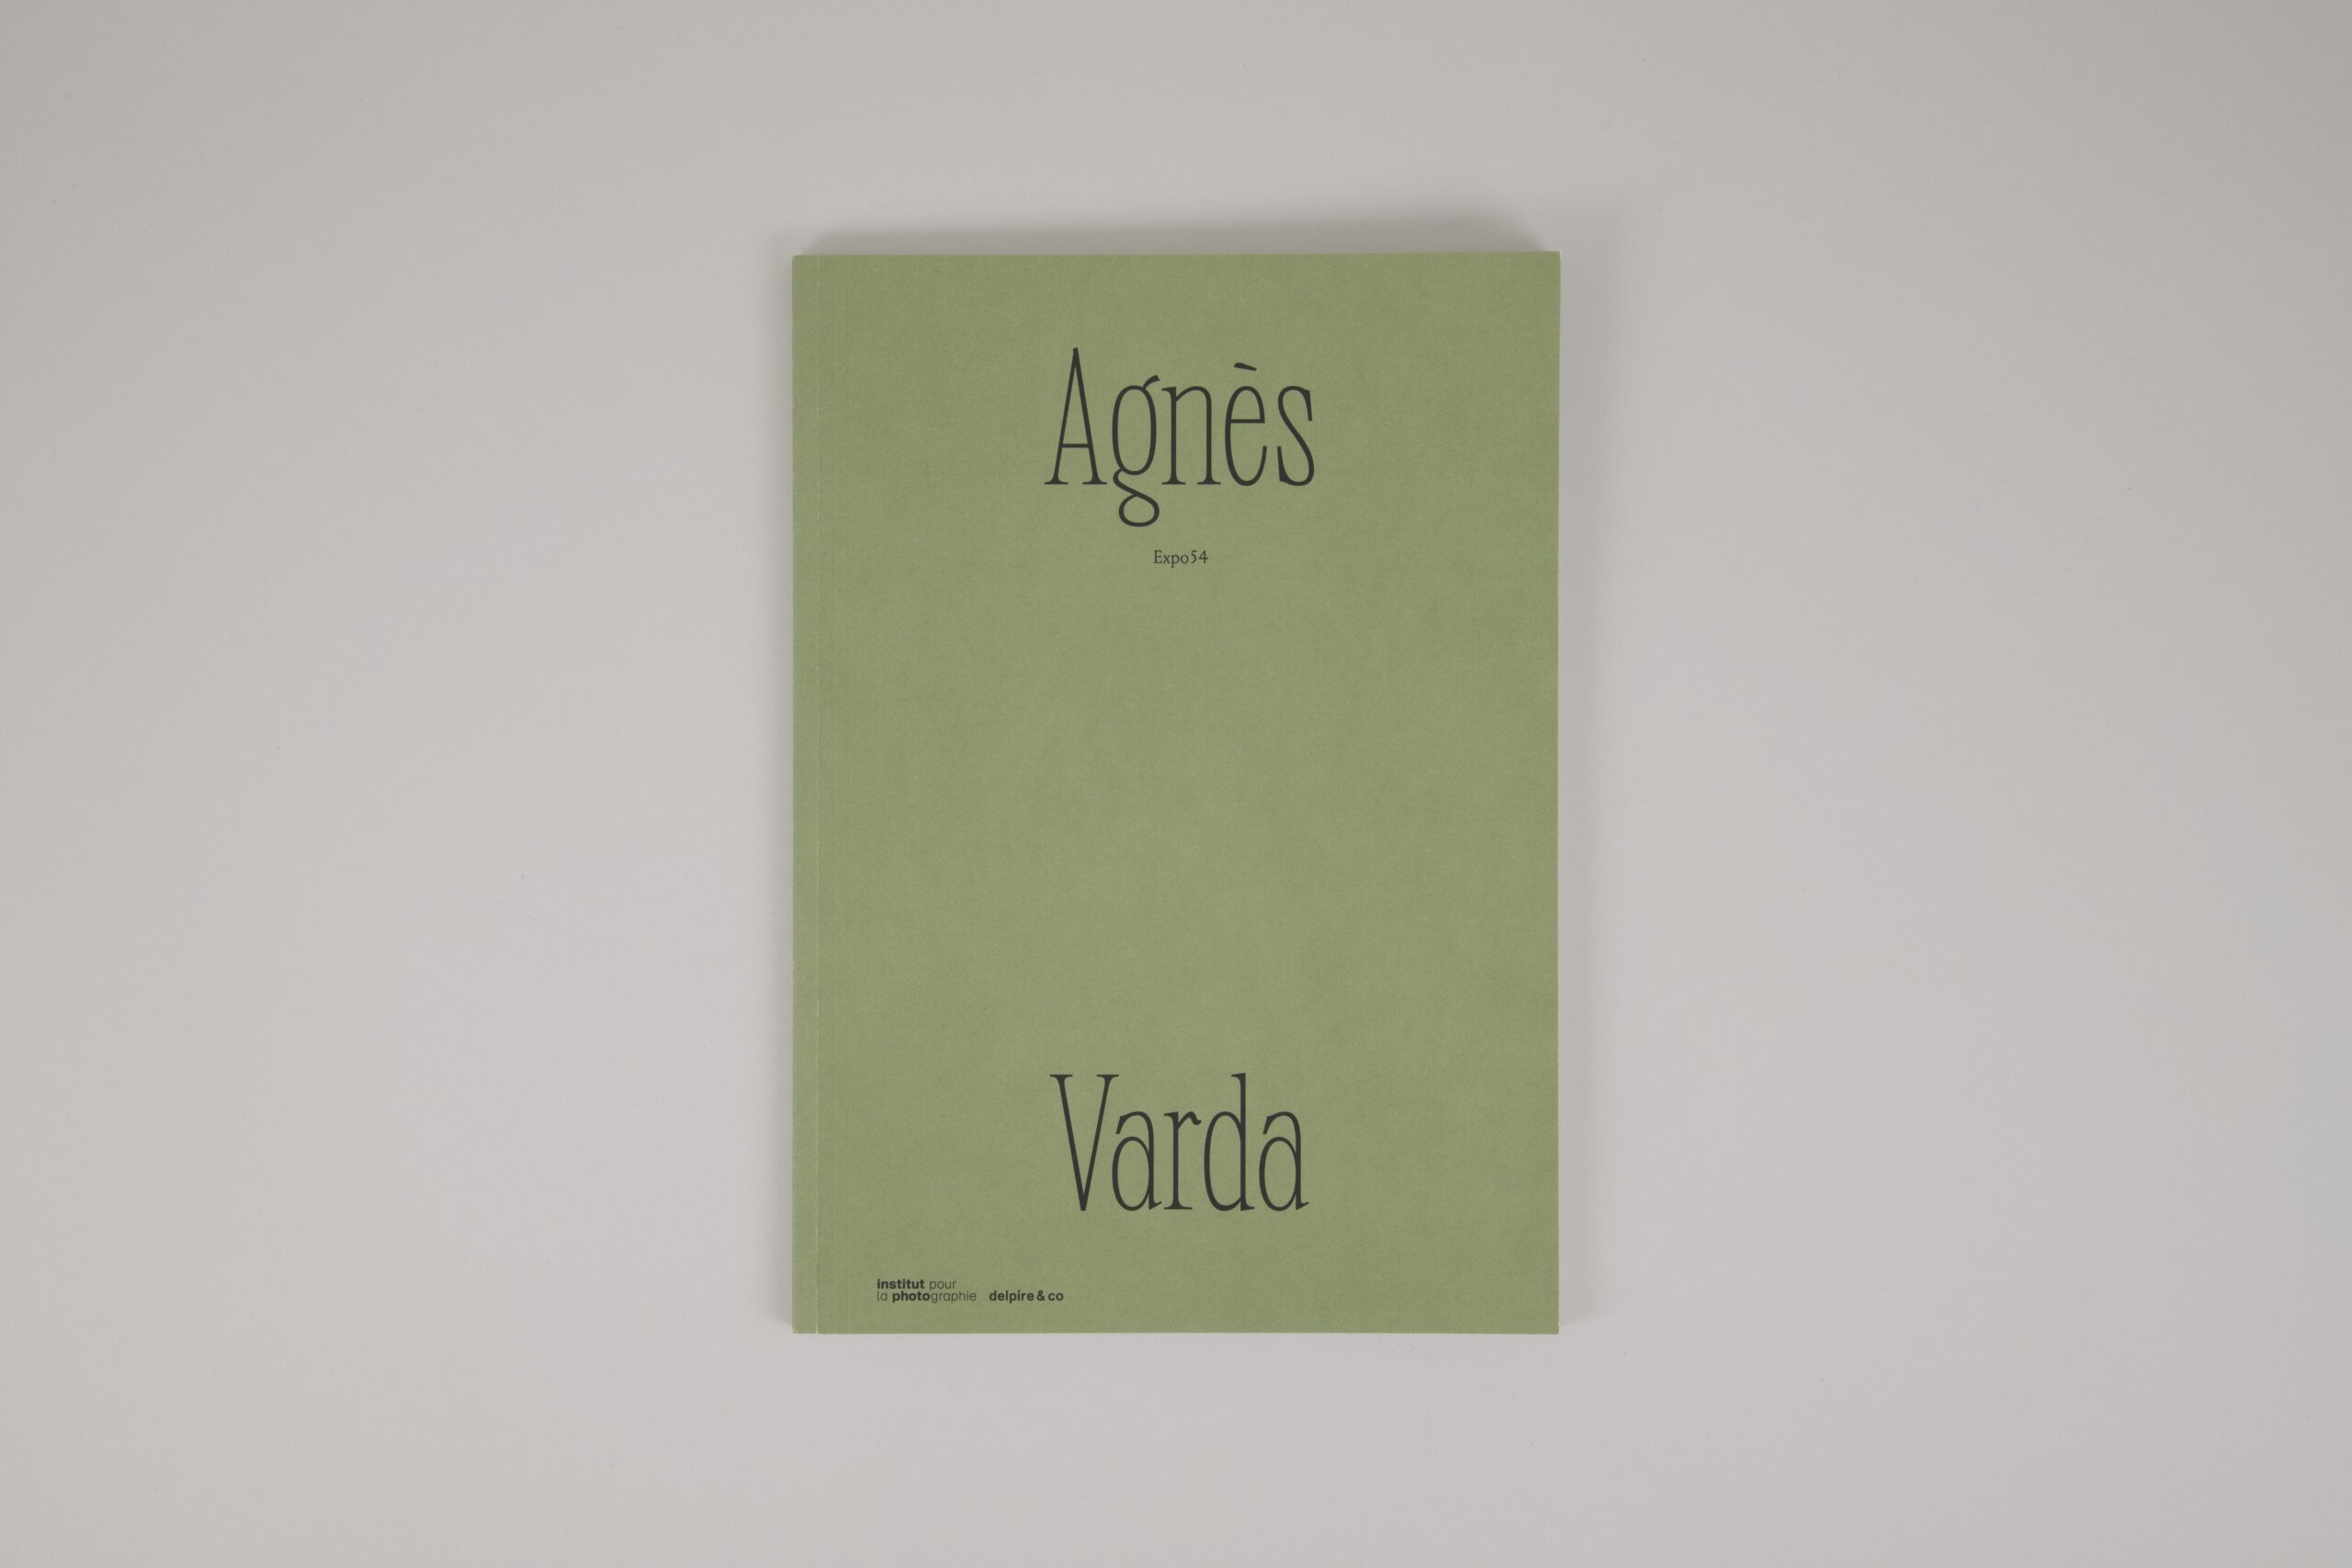 agnes-varda-expo54-carnets-delpire-and-co-institut-pour-la-photographie-cover